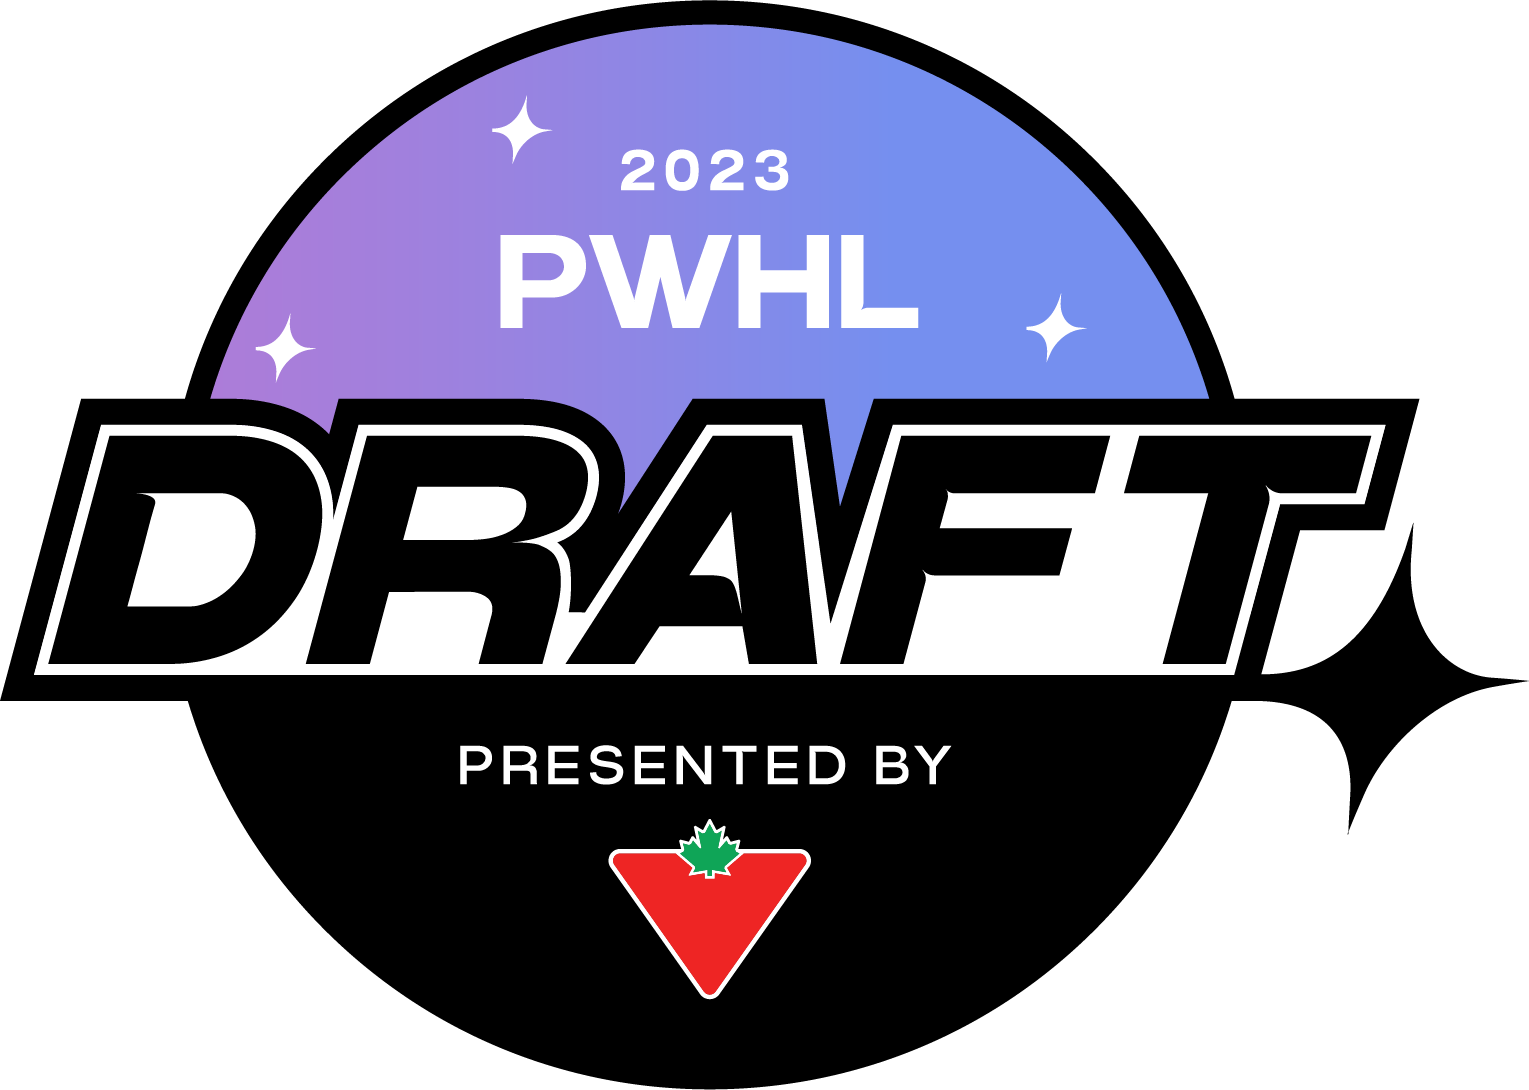 PWHL Draft Forecast: New York and Toronto